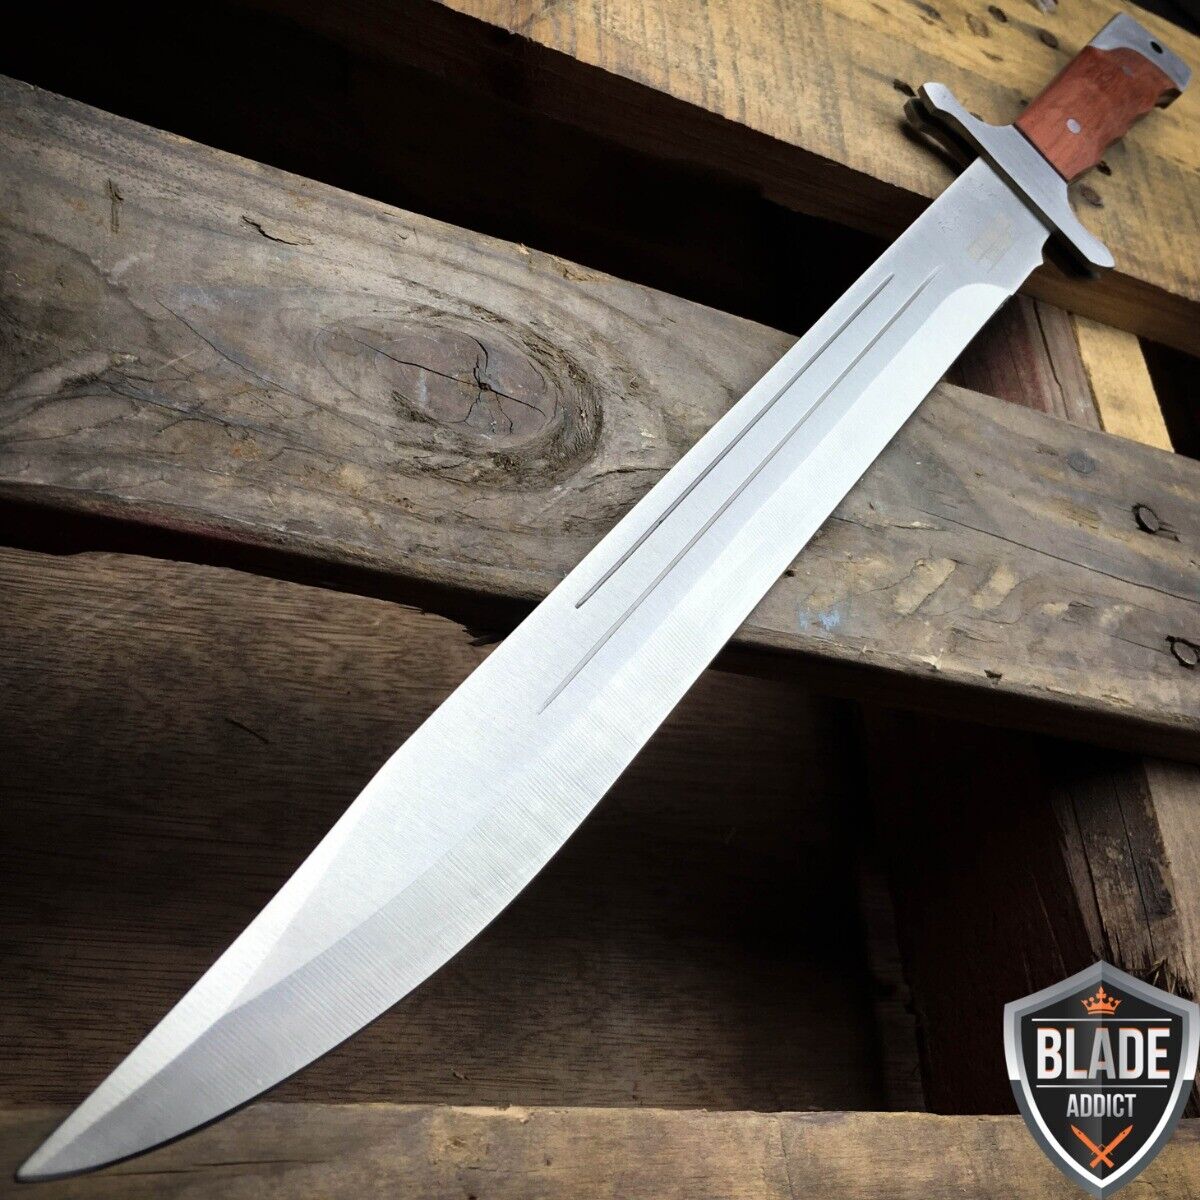 18" FULL TANG MACHETE HUNTING KNIFE SWORD WOOD HANDLE W/ SHEATH COMBAT OUTDOOR